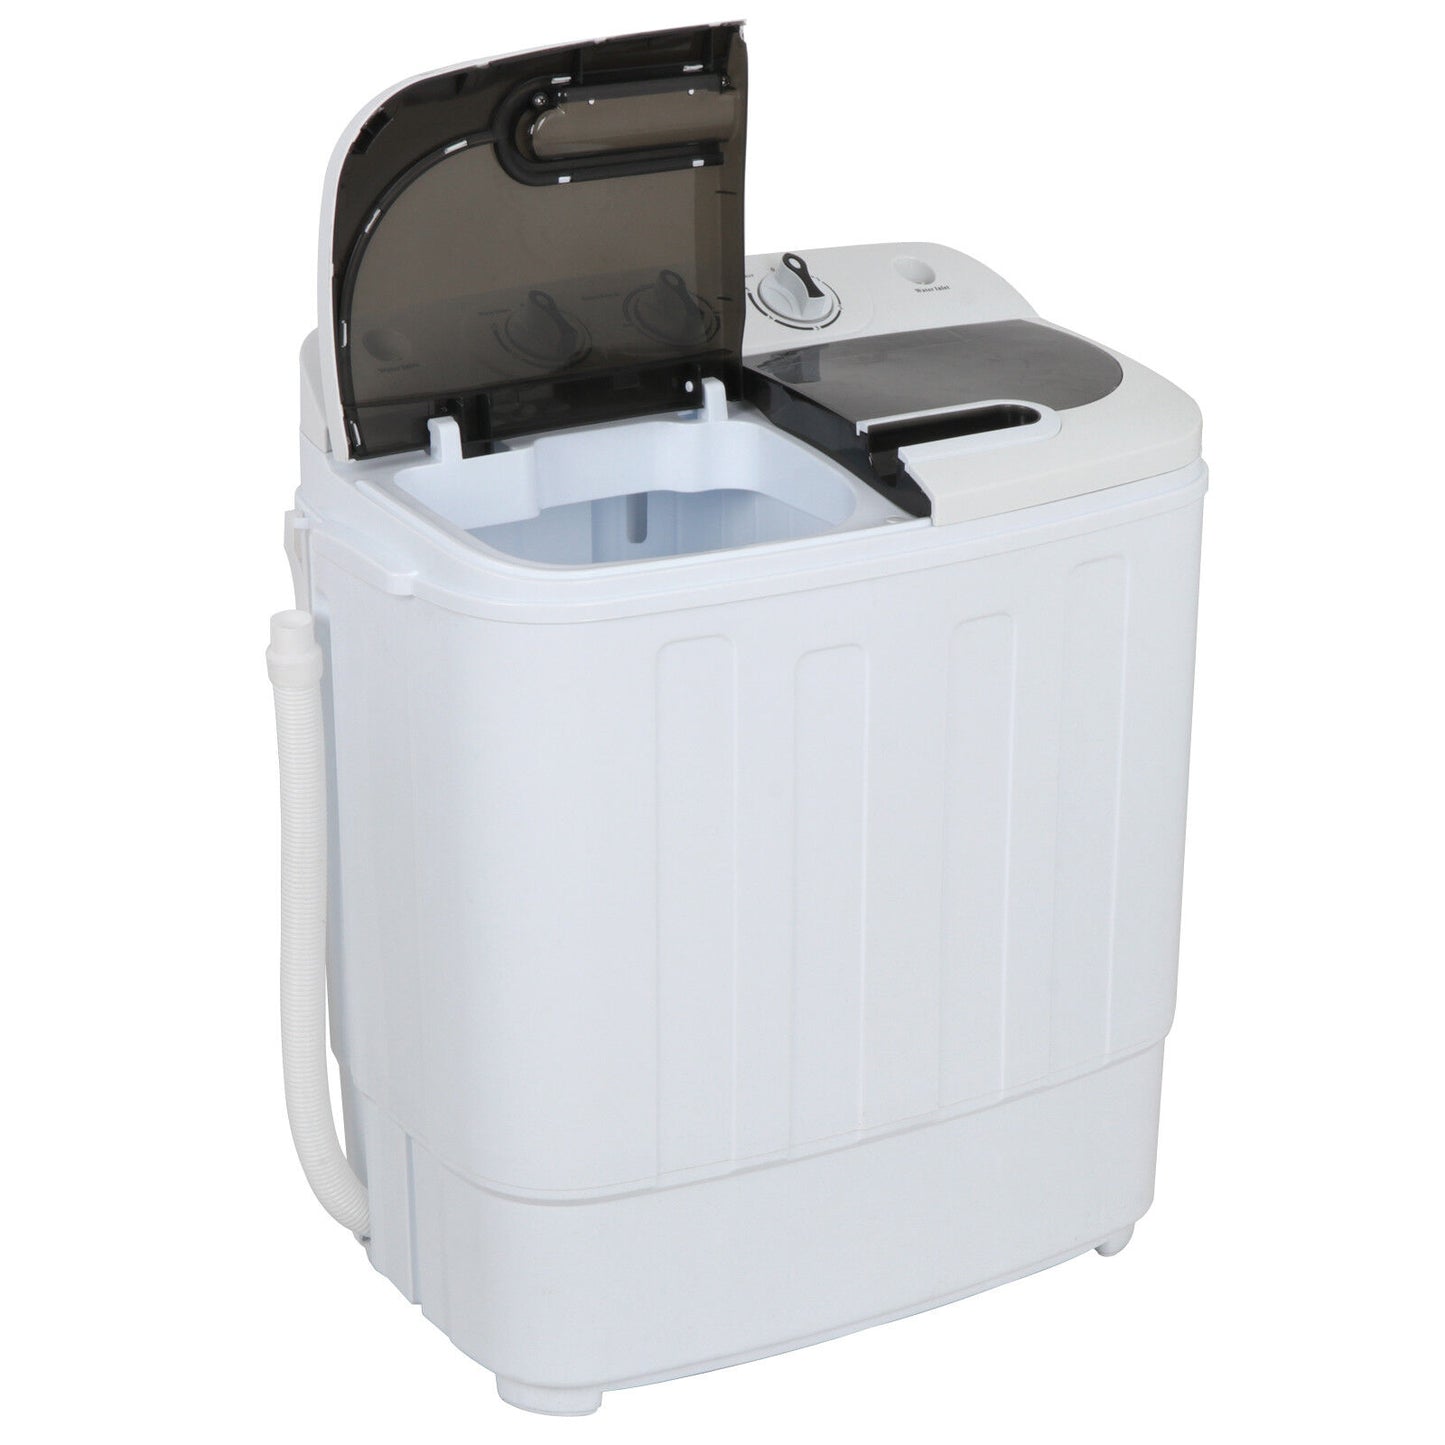 Portable Mini Wash Machine Compact Twin Tub 13lbs Top Load Washer Spin Dryer